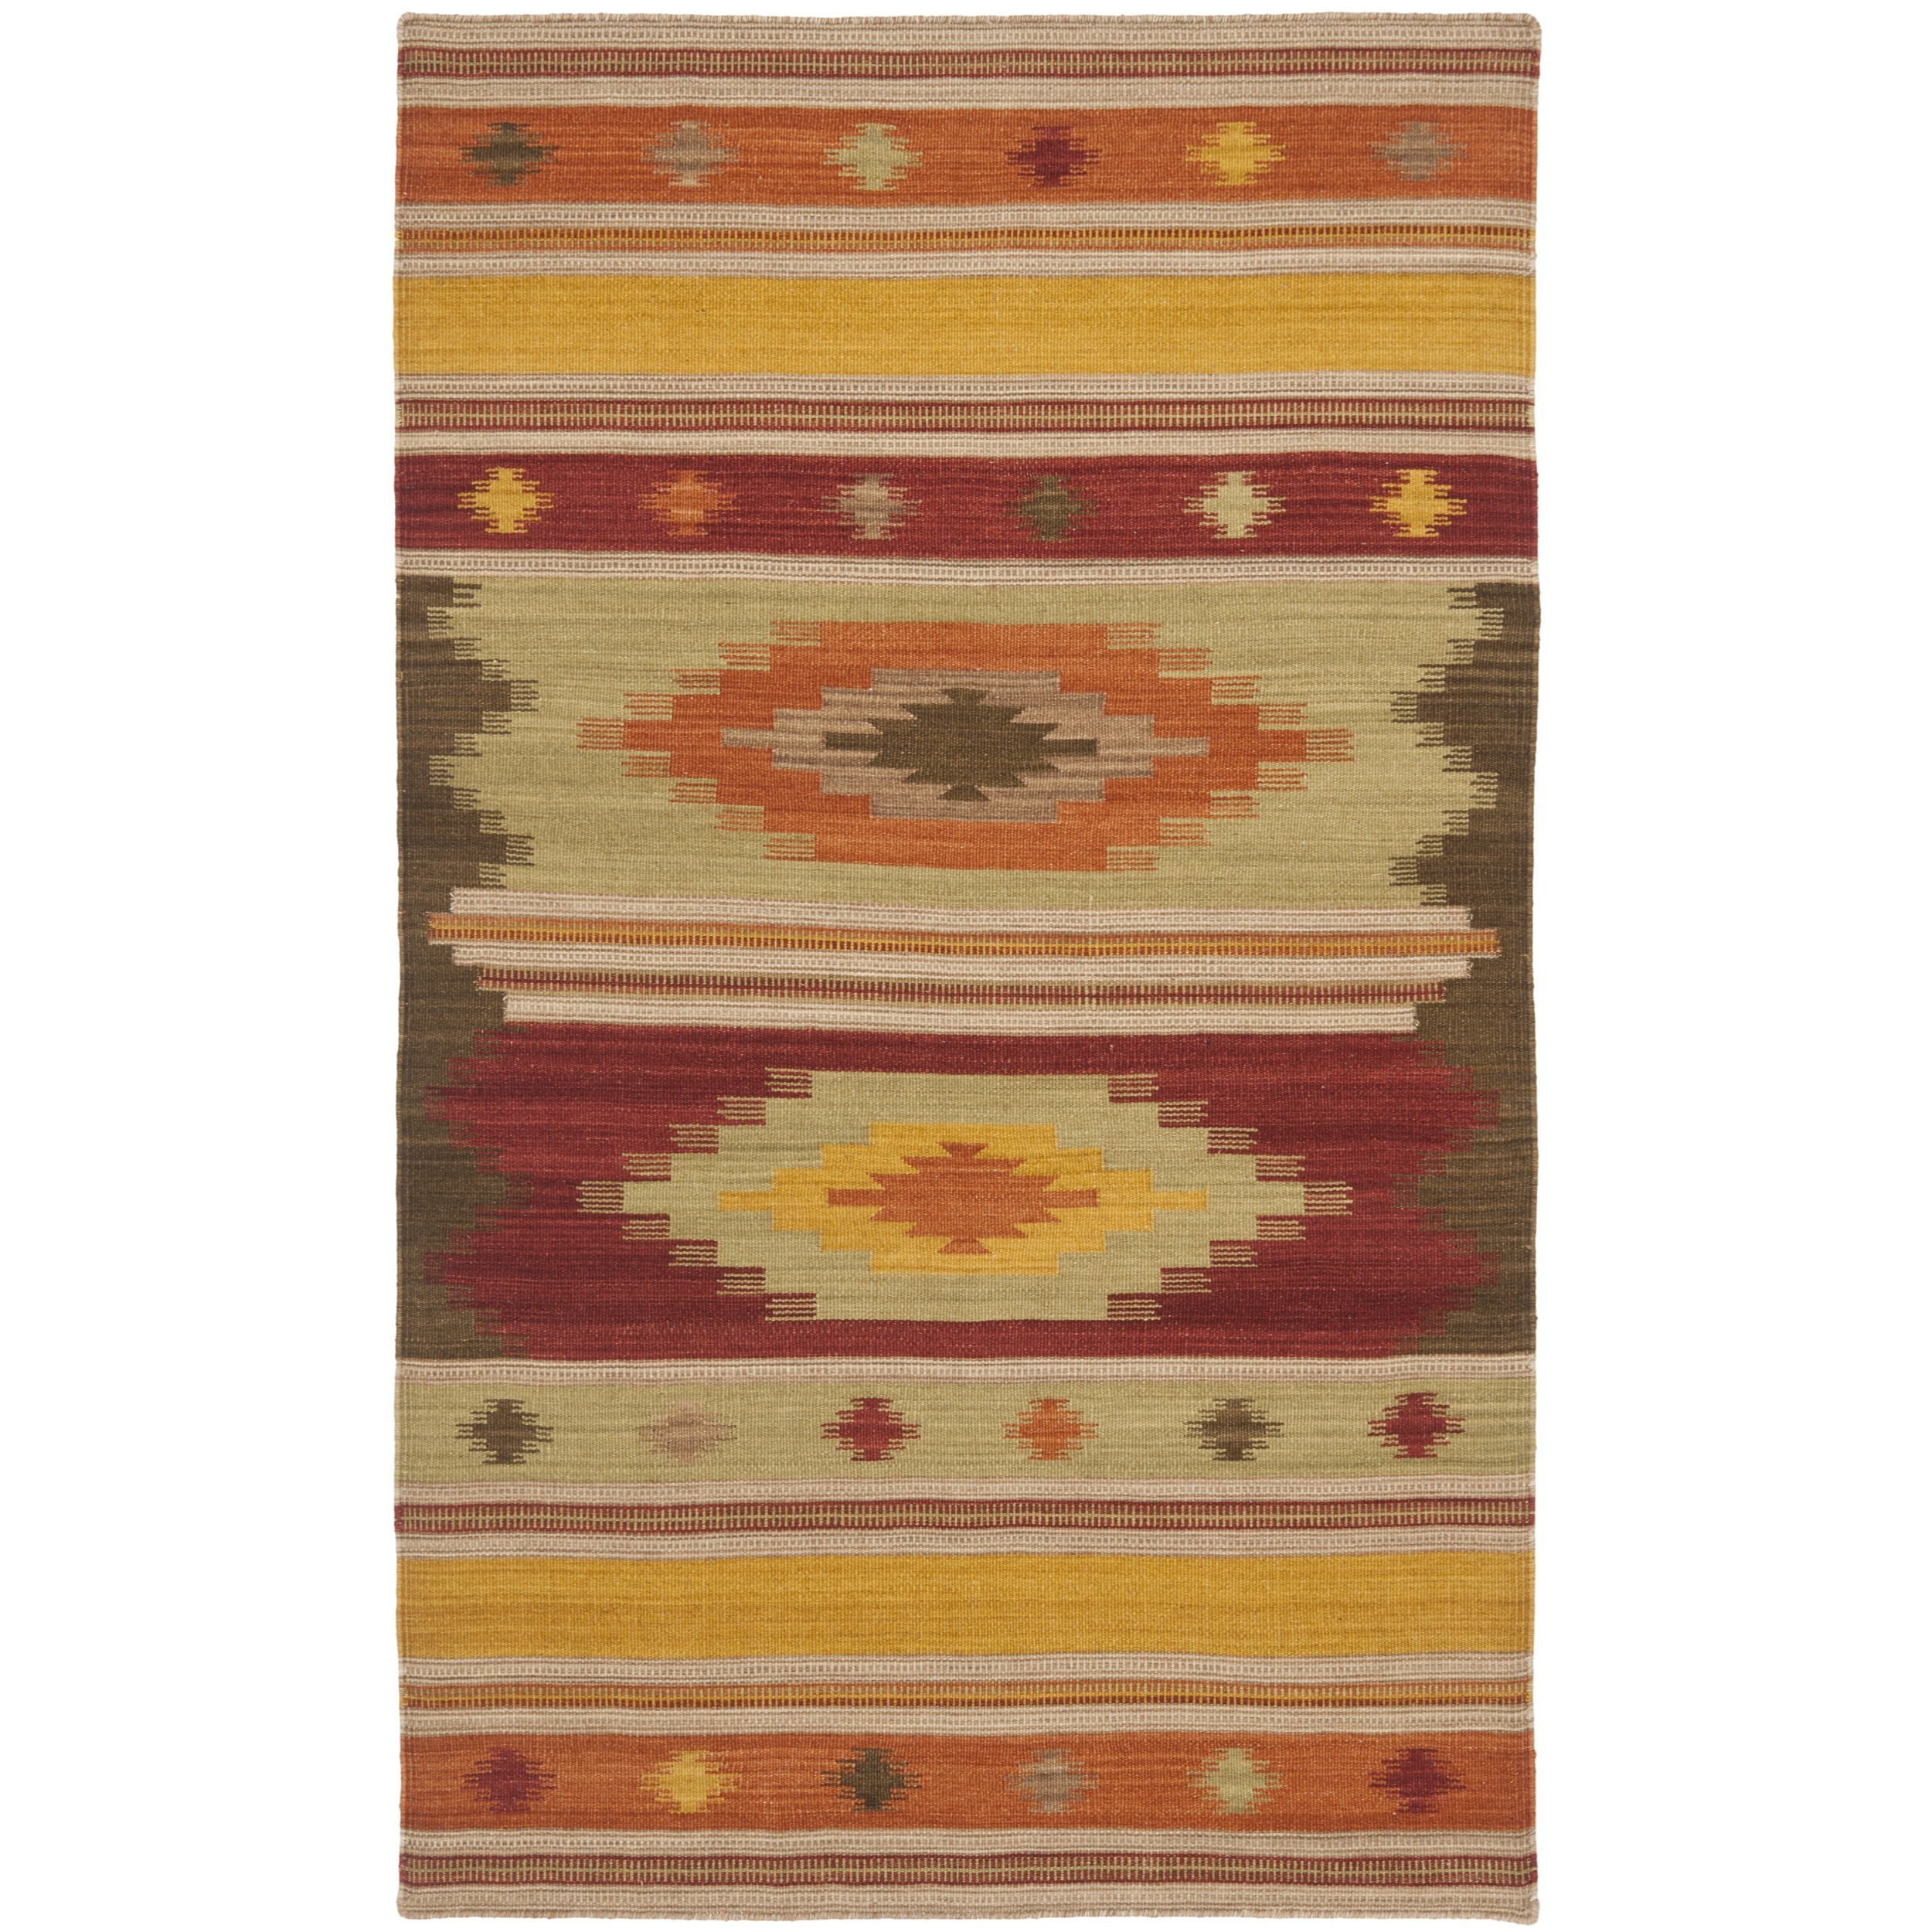 Safavieh Hand woven Navajo Kilim Brown/ Multi Wool Rug (3 X 5)